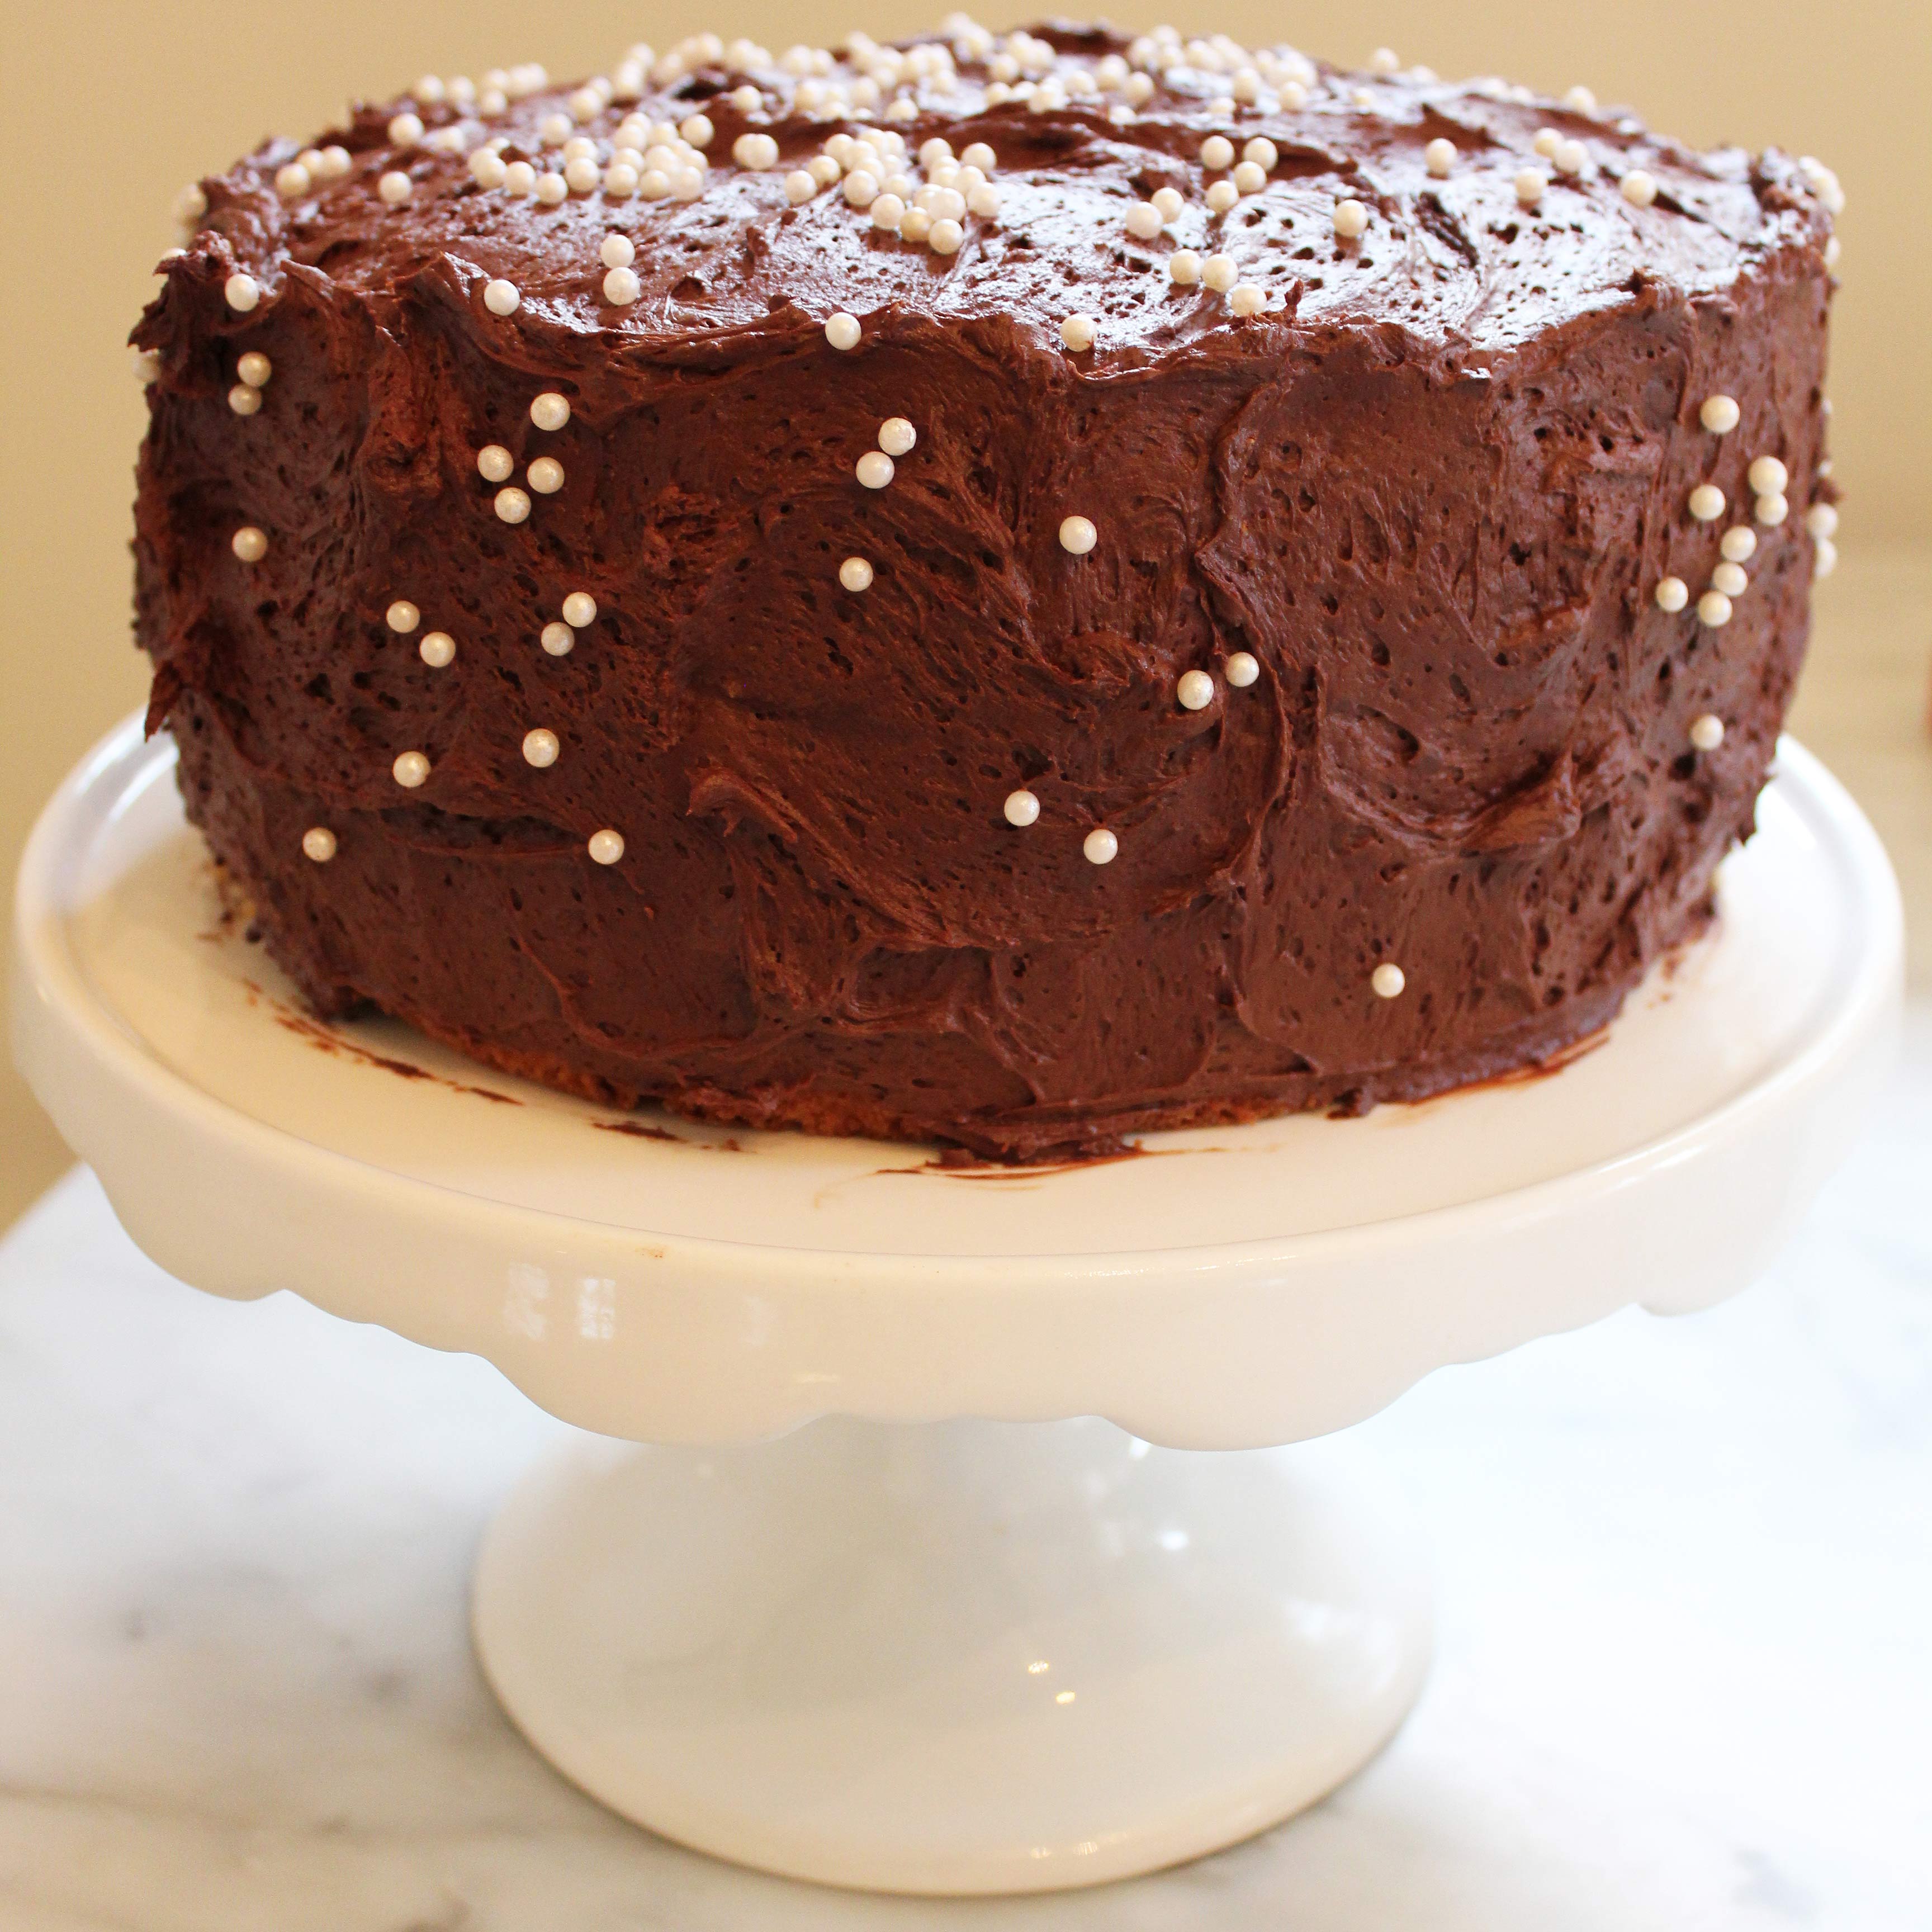 Martha Stewart’s Buttermilk Cake with Chocolate Frosting